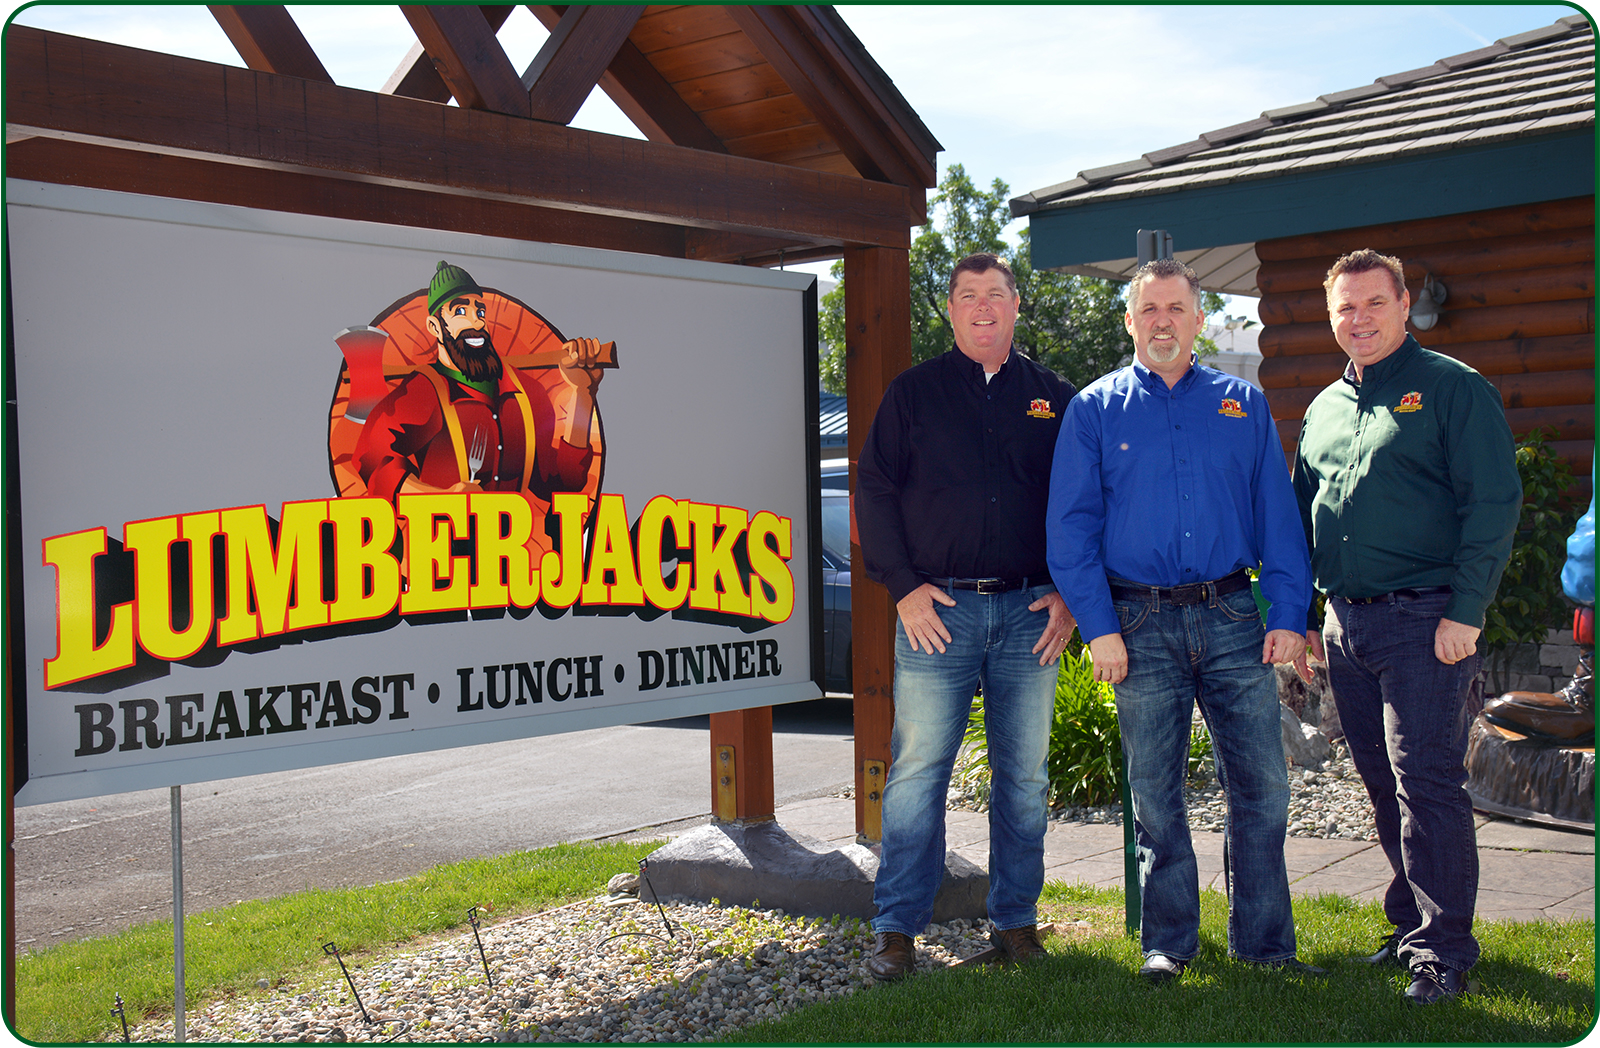 Lumberjacks Leadership Pose For Picture By Lumberjacks Sign. Sign reads: Lumberjacks - Breakfast, Lunch, Dinner